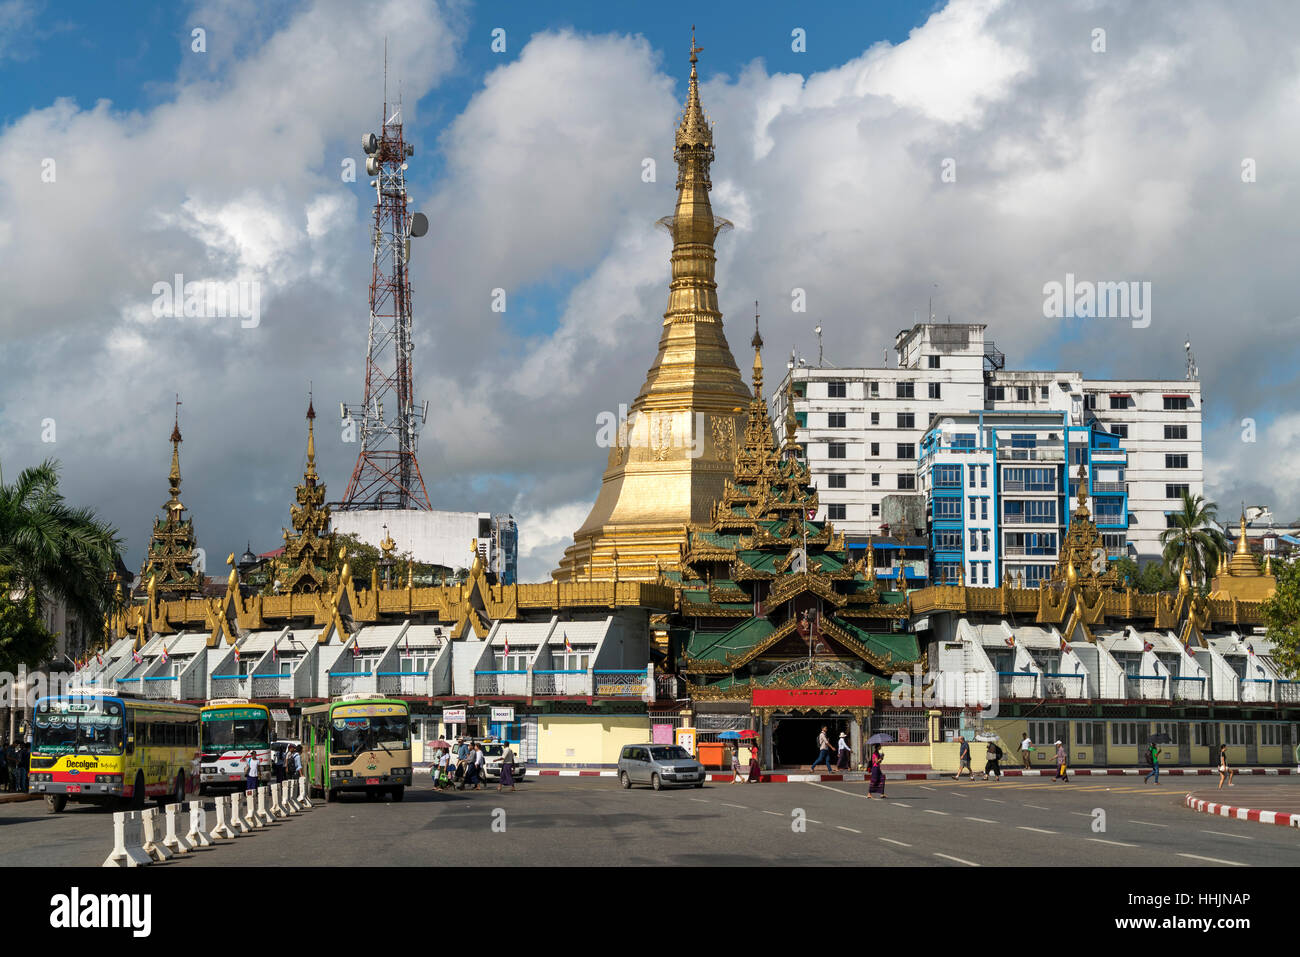 Sule Pagoda in Yangon  or Rangoon, Myanmar, Asia Stock Photo